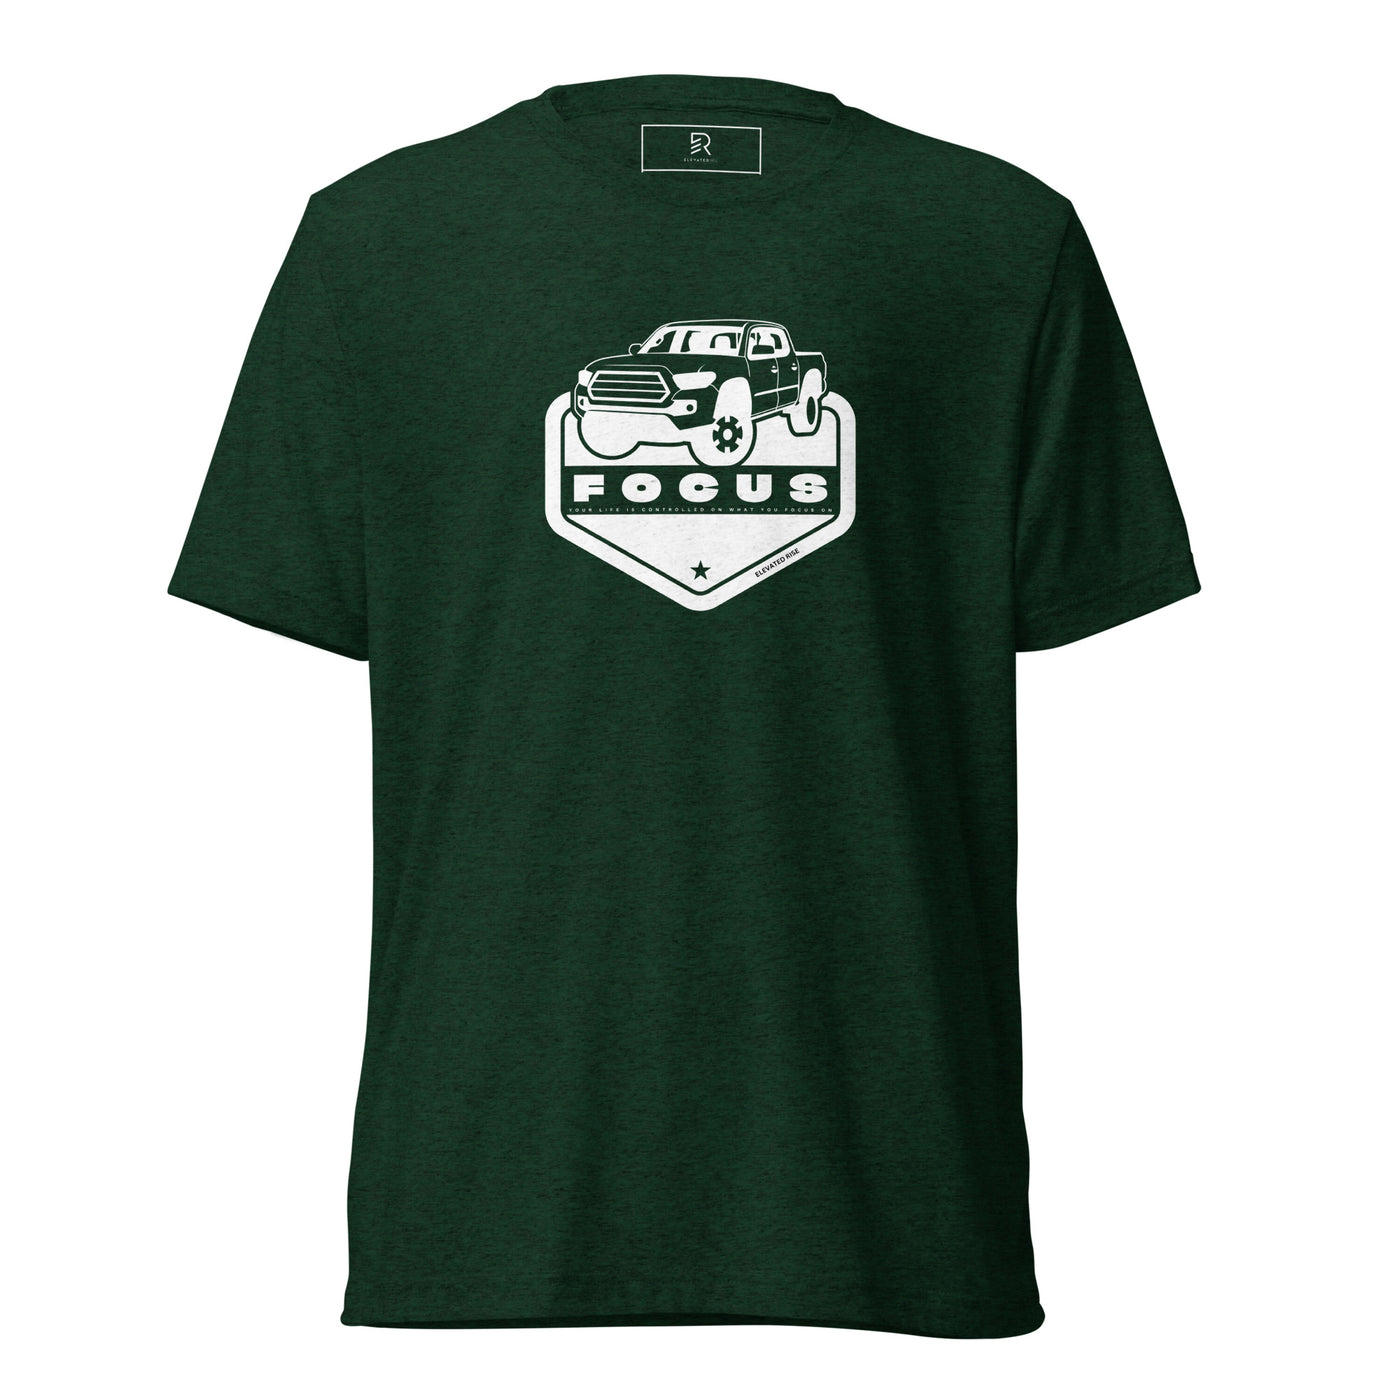 Men's Emerald Tri-Blend T-Shirt - Focus On